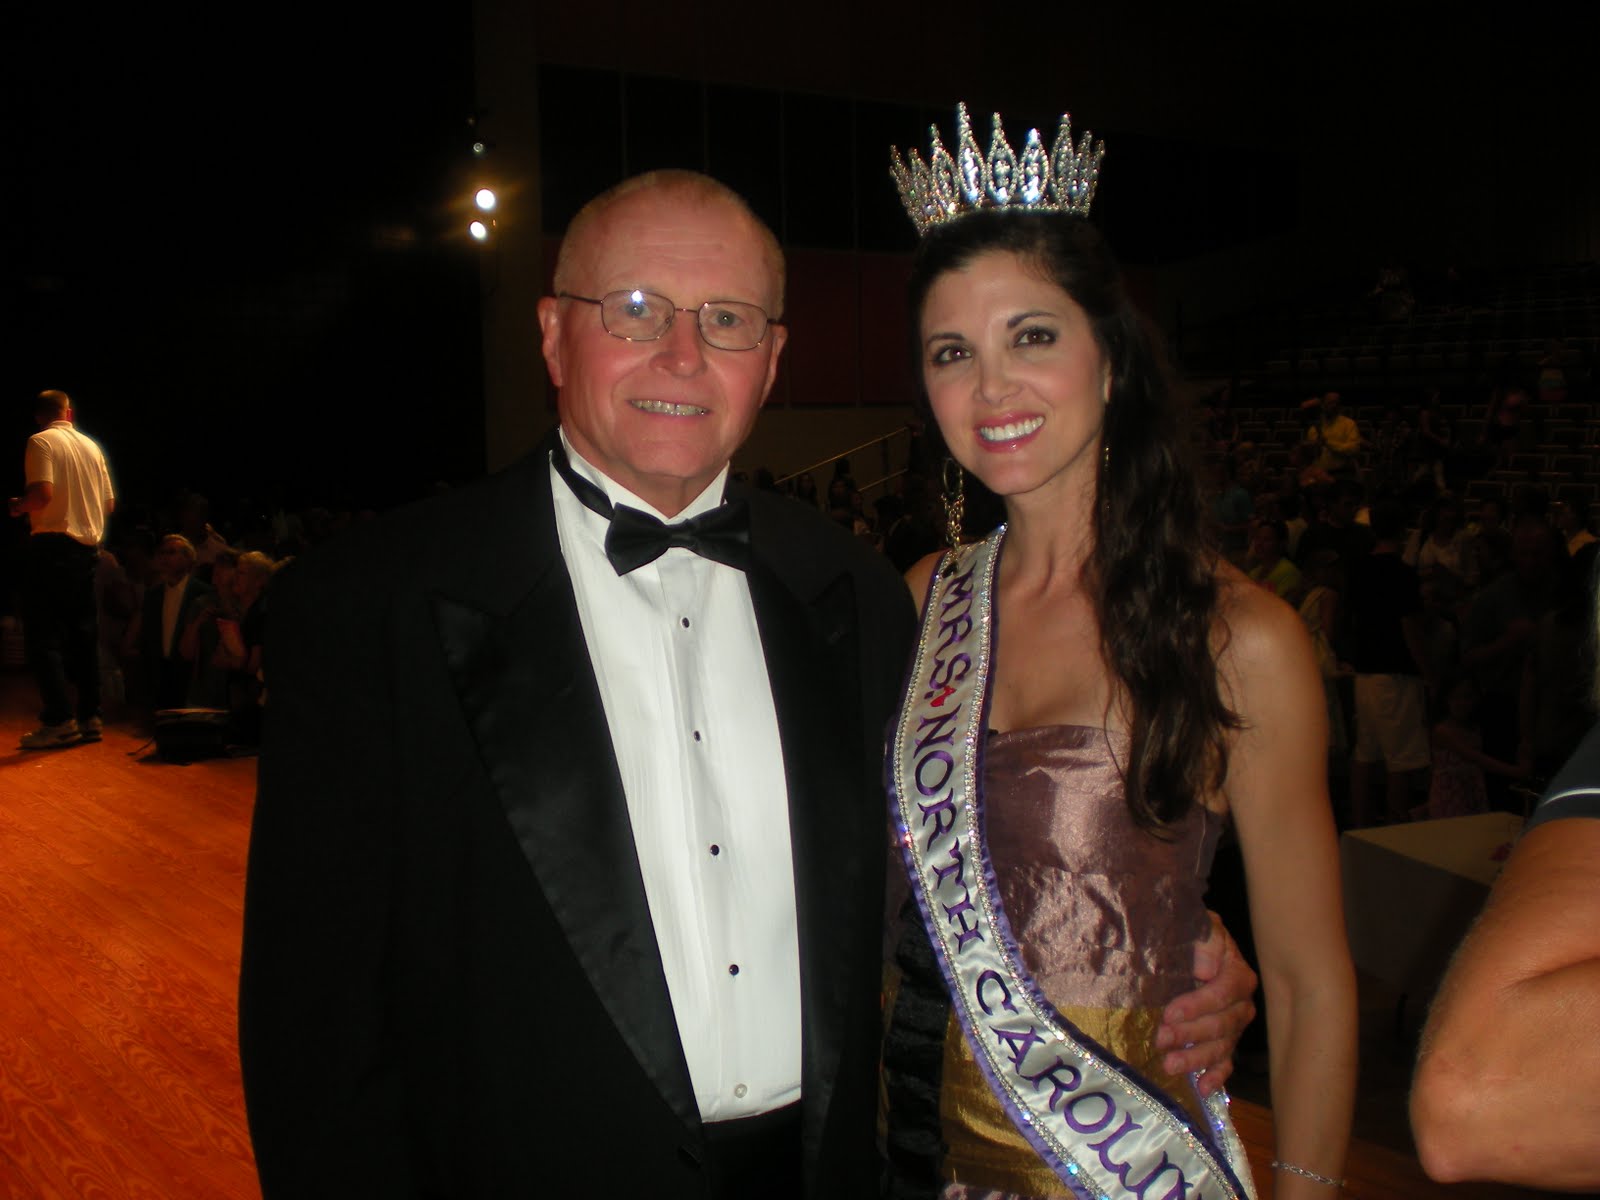 Mrs. North Carolina International ~ Judges Miss Lincoln County Apple Queen 